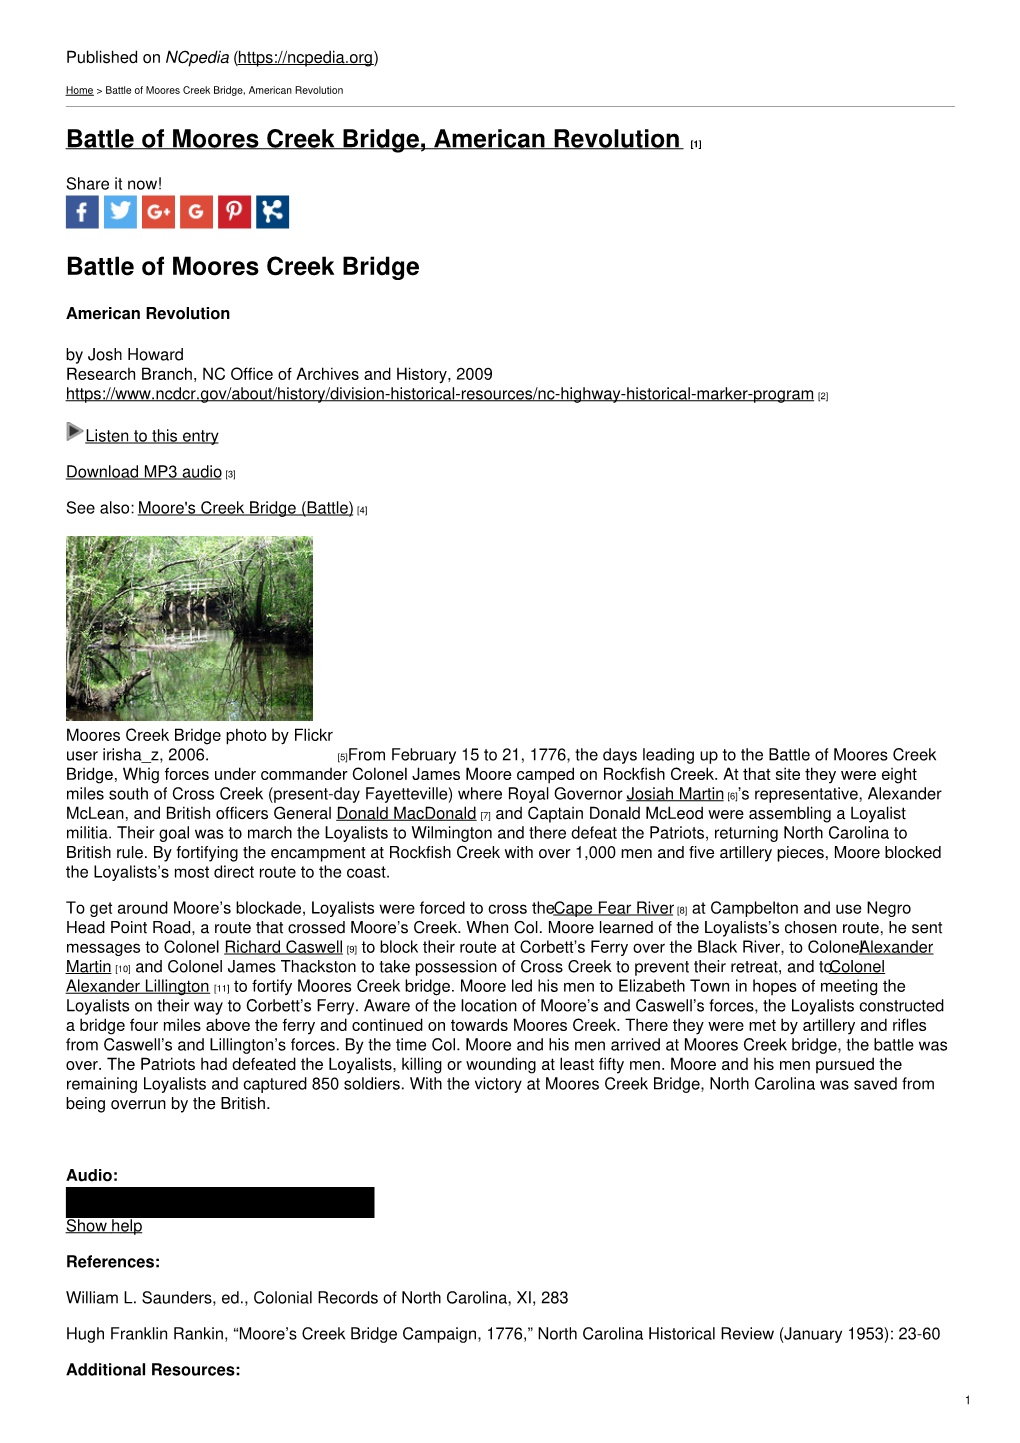 Battle of Moores Creek Bridge, American Revolution